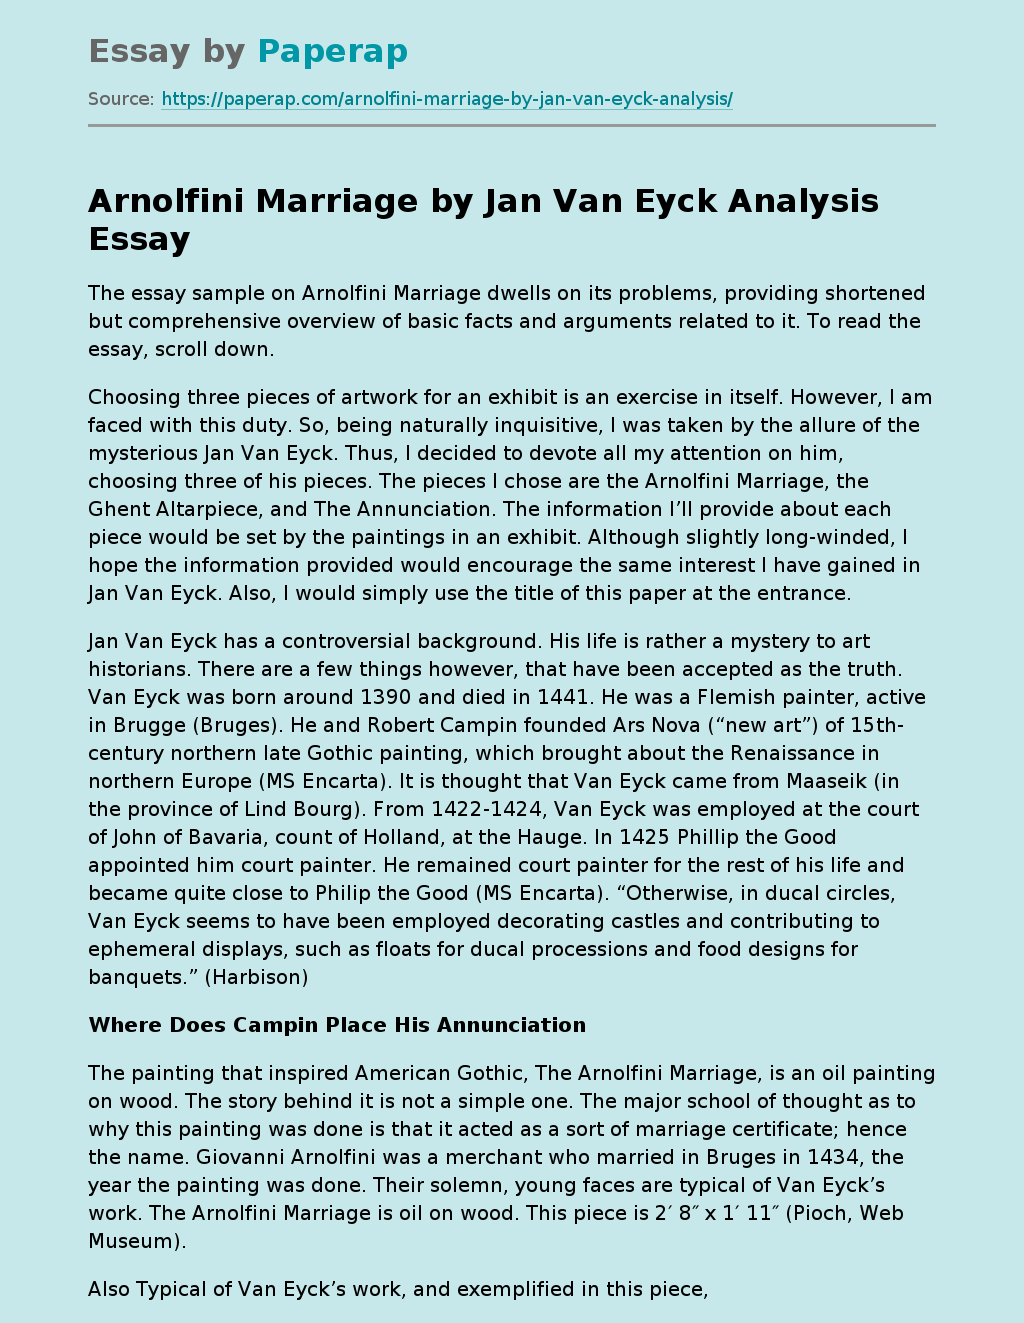 Arnolfini Marriage by Jan Van Eyck Analysis